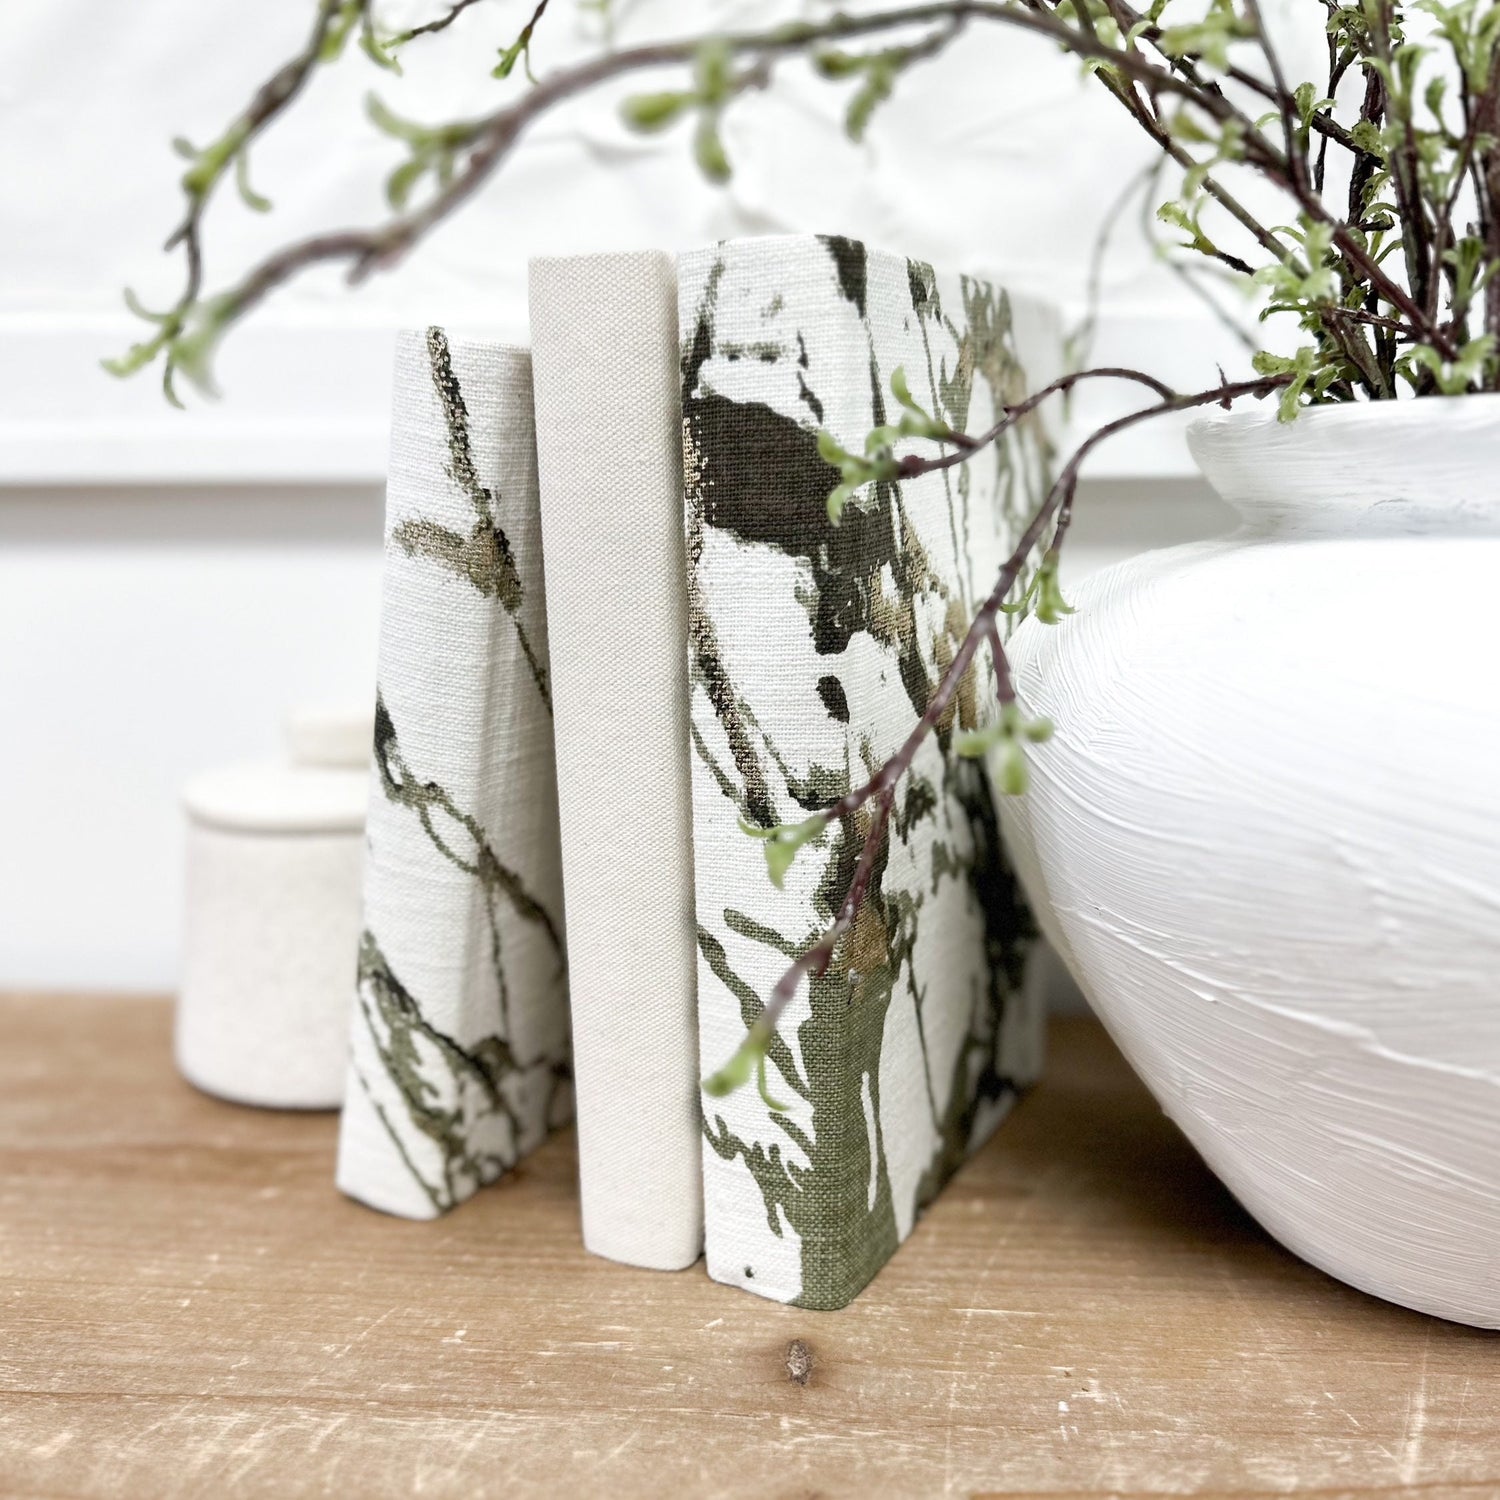 Fabric Wrapped Books for Shelf Decor, Marble Home Decor, Green Modern Decor